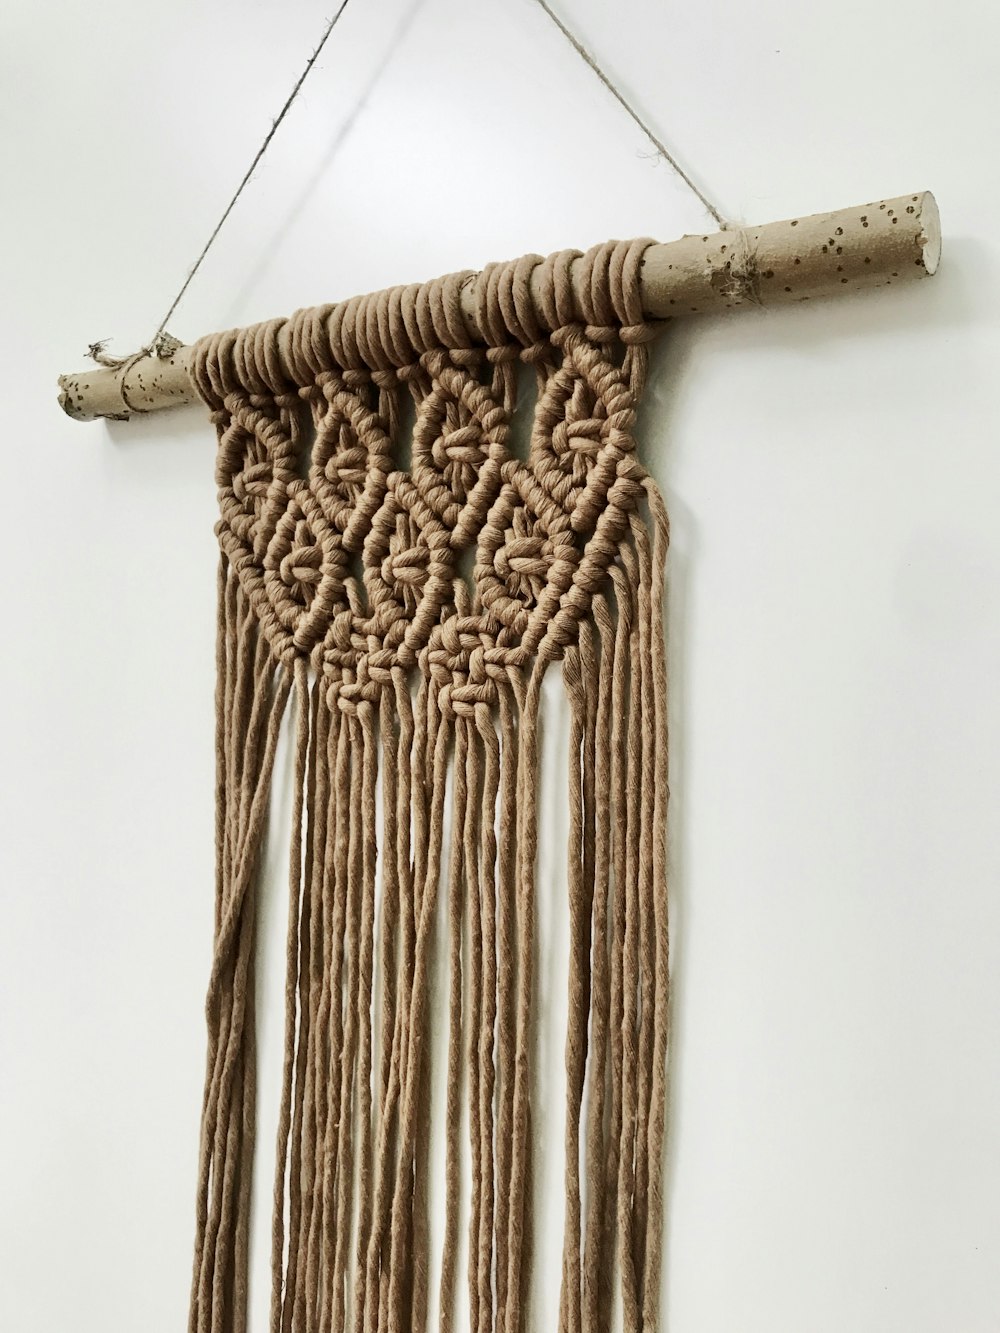 ein Wandbehang aus Seil und Seil